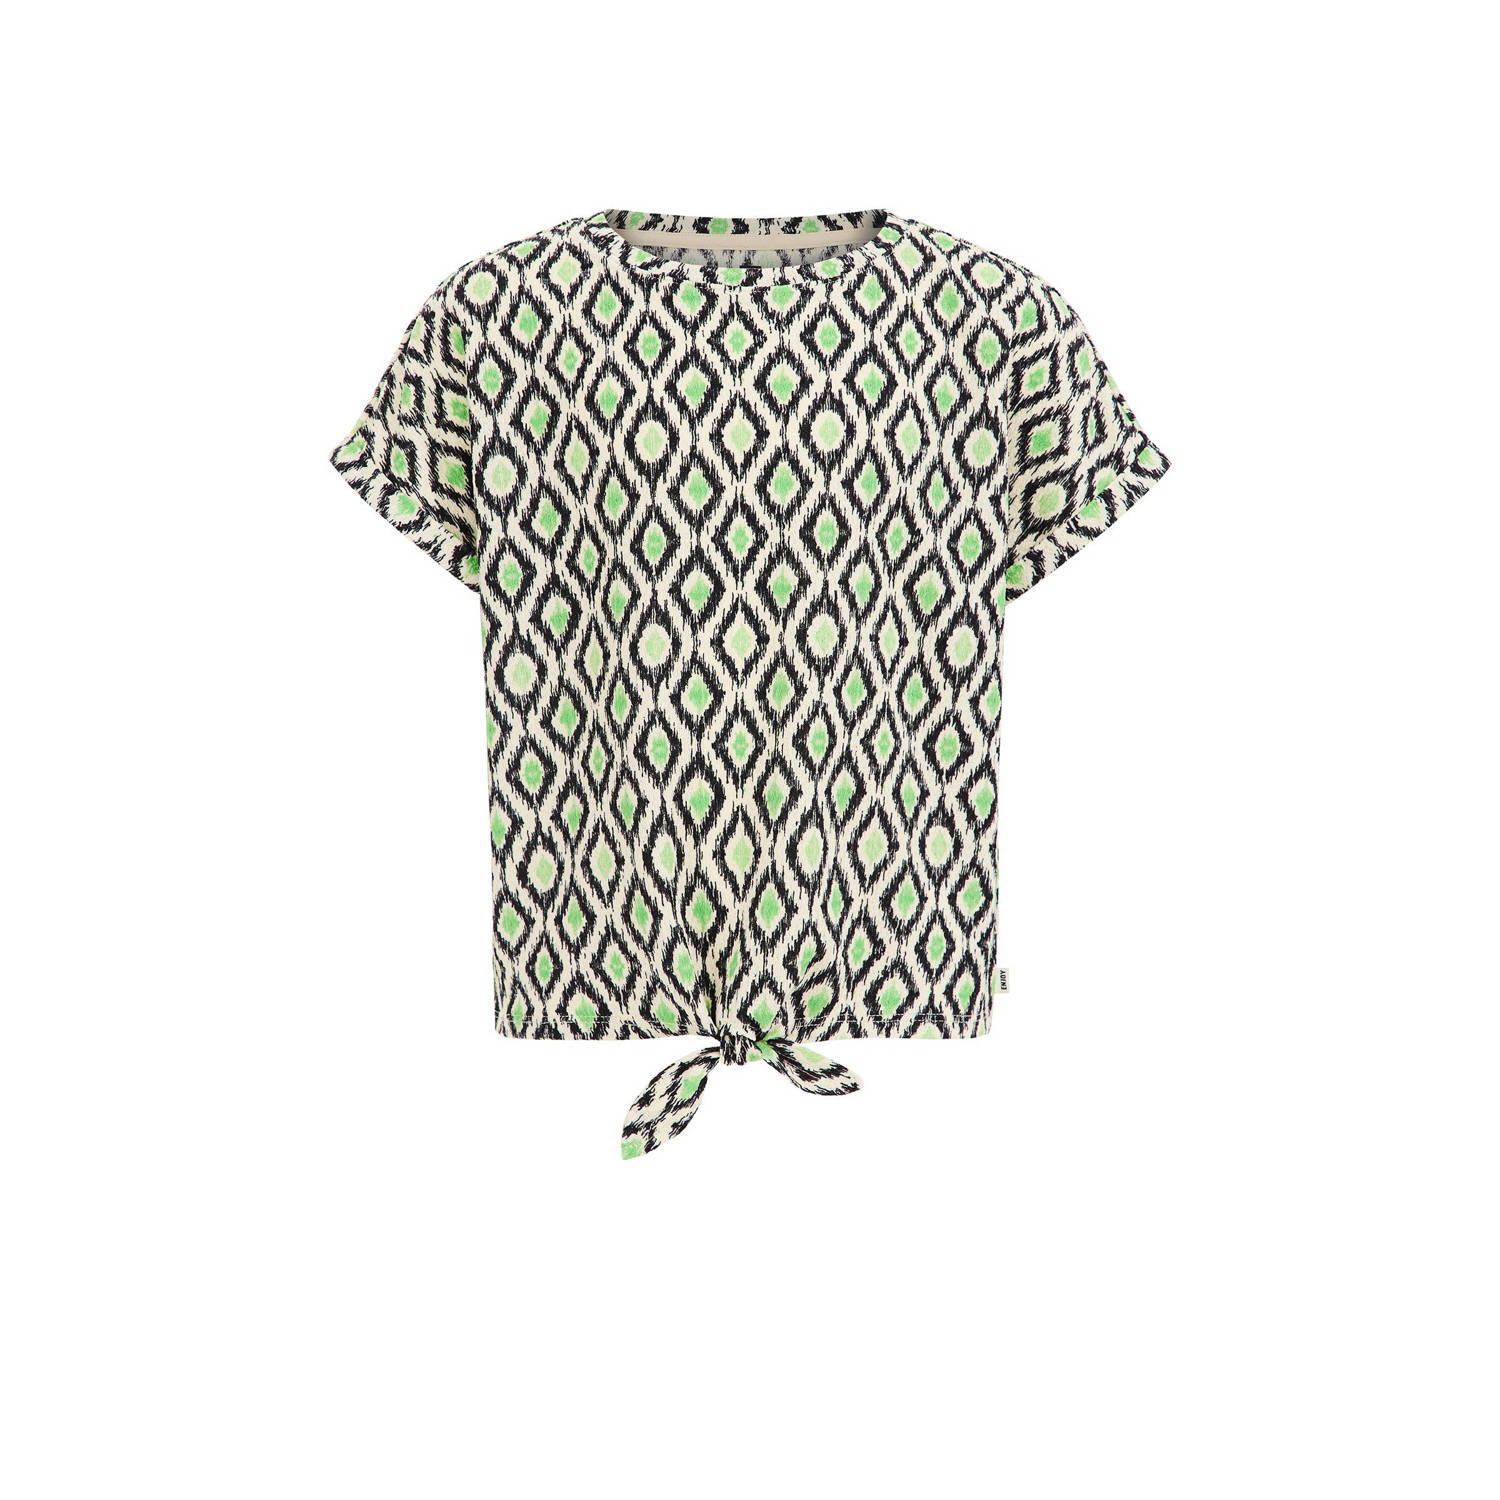 WE Fashion T-shirt met all over print groen beige zwart Meisjes Polyester Ronde hals 134 140